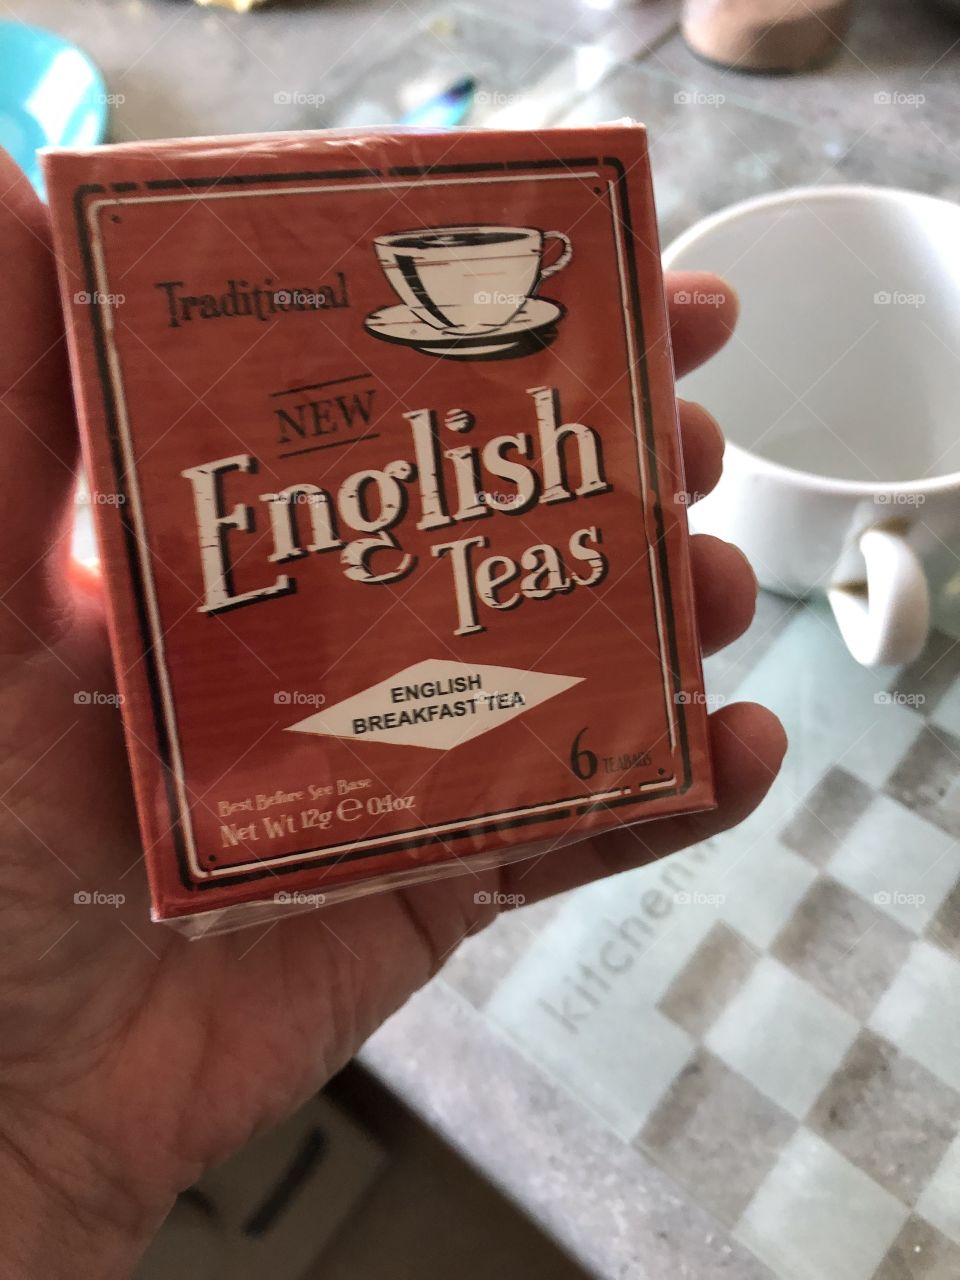 Small box of English Tea